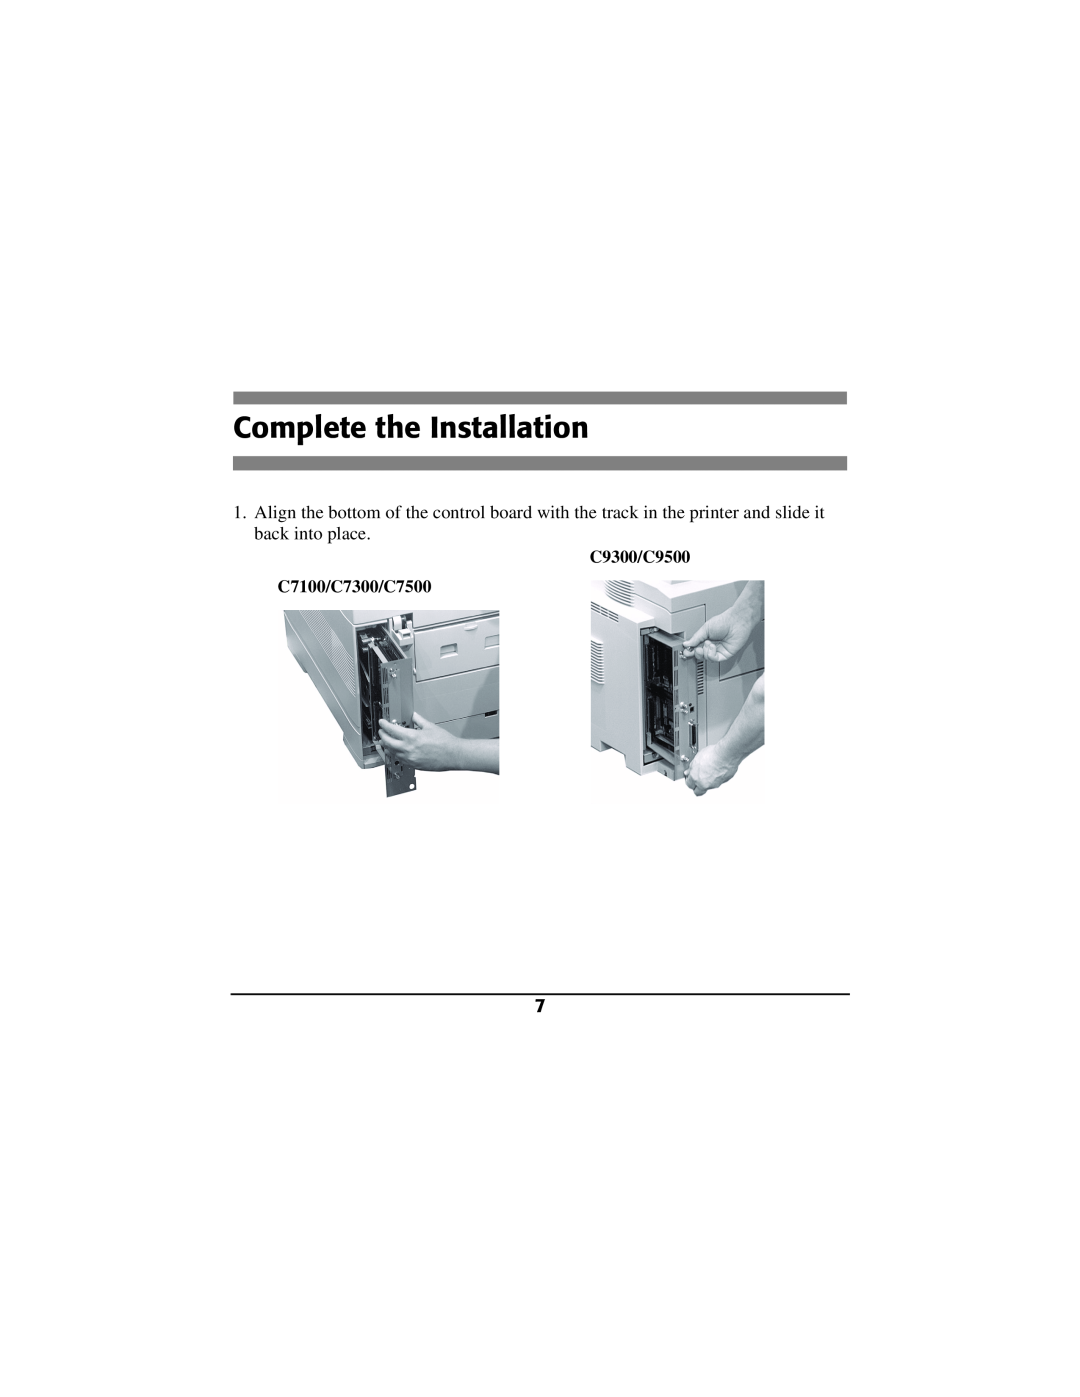 Oki 70040901 installation instructions Complete the Installation, C9300/C9500 C7100/C7300/C7500 